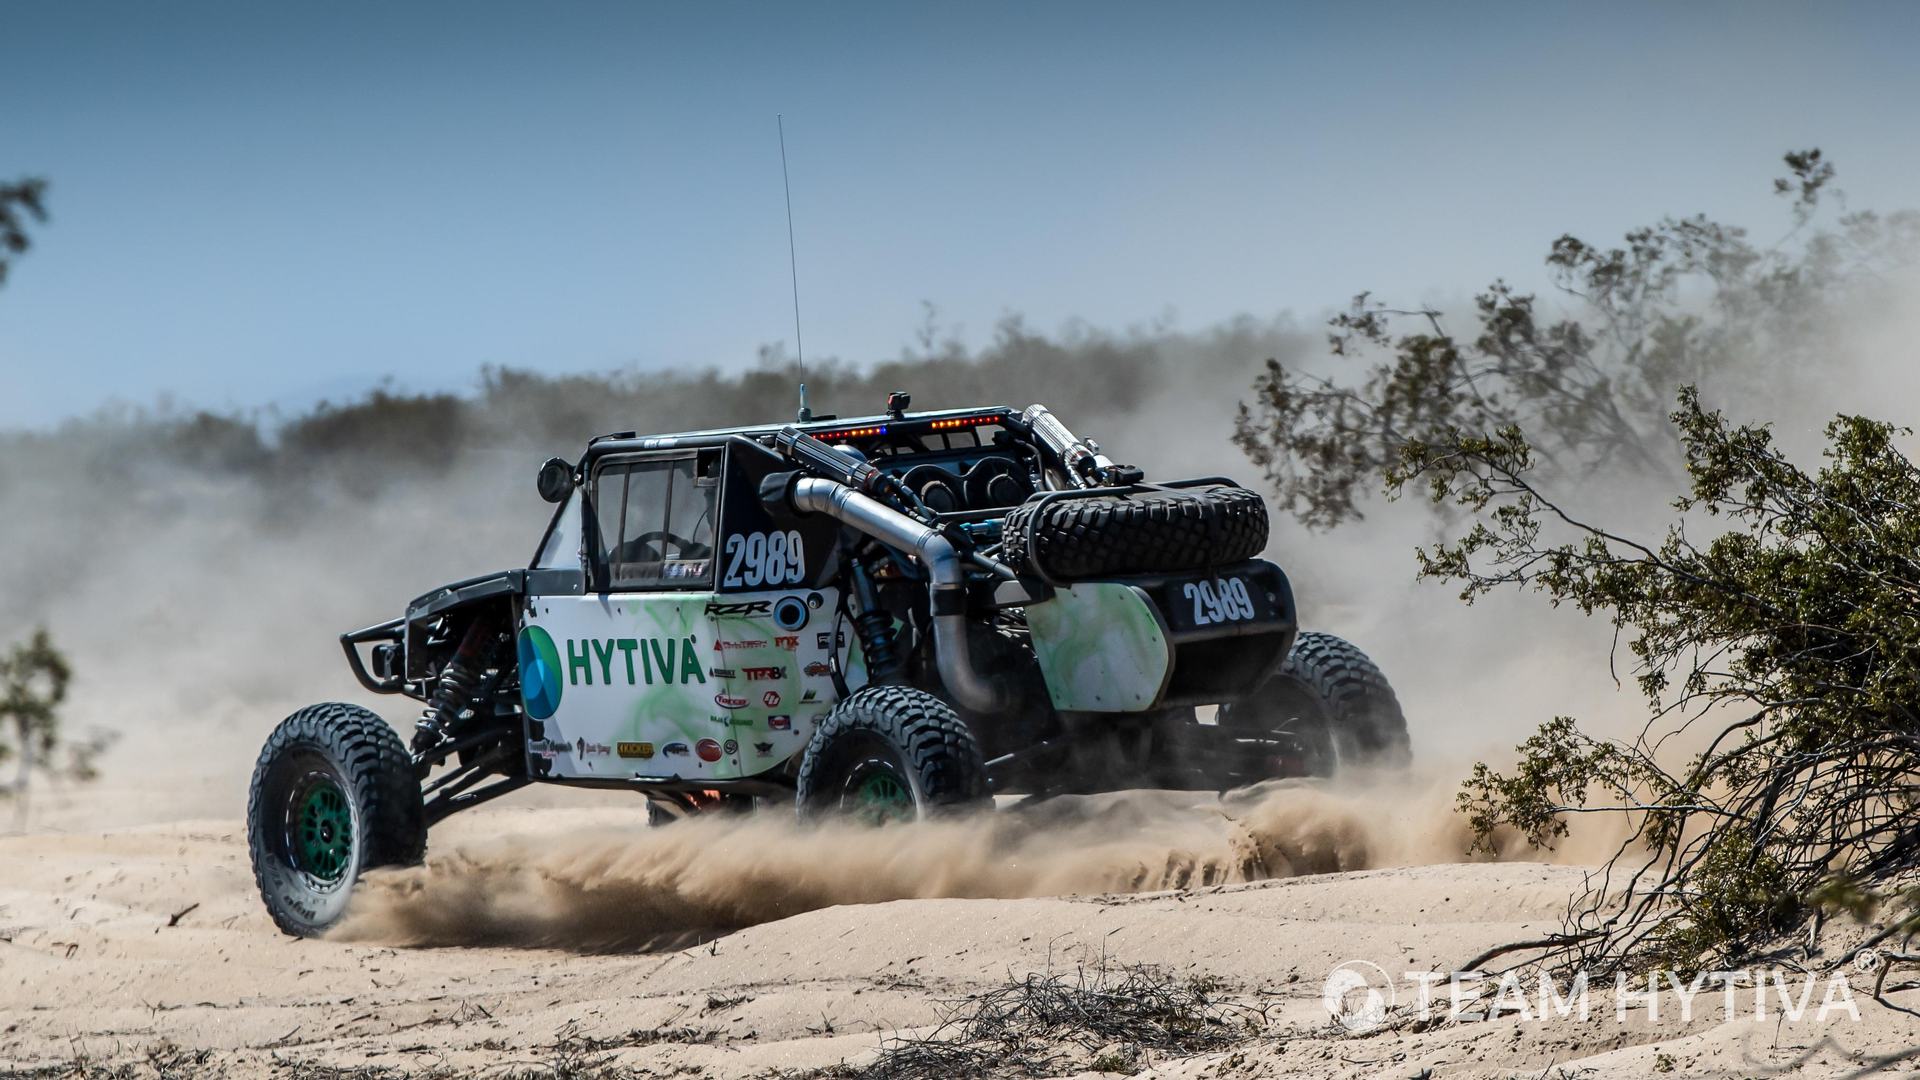 Team Hytiva® takes home 3rd place in San Felipe Baja Mexico